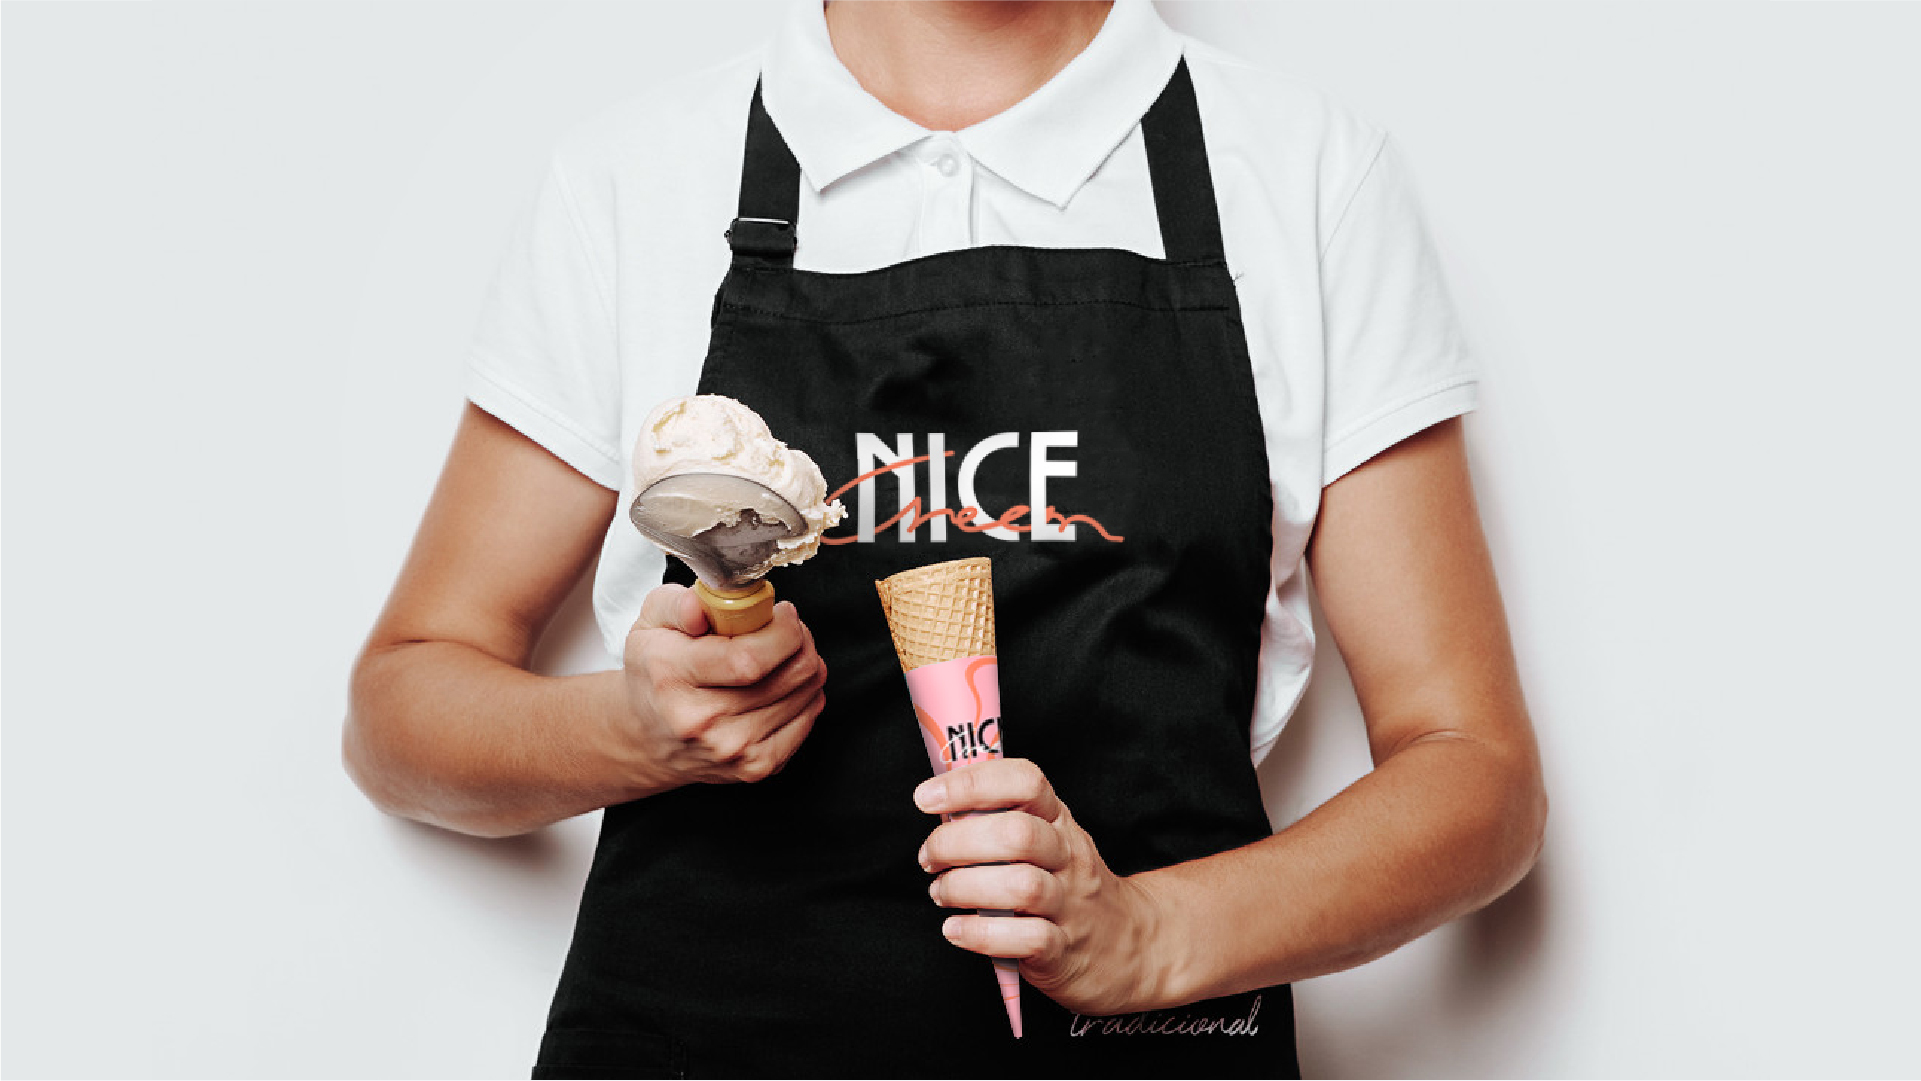 NICECREAM冰淇淋包装设计